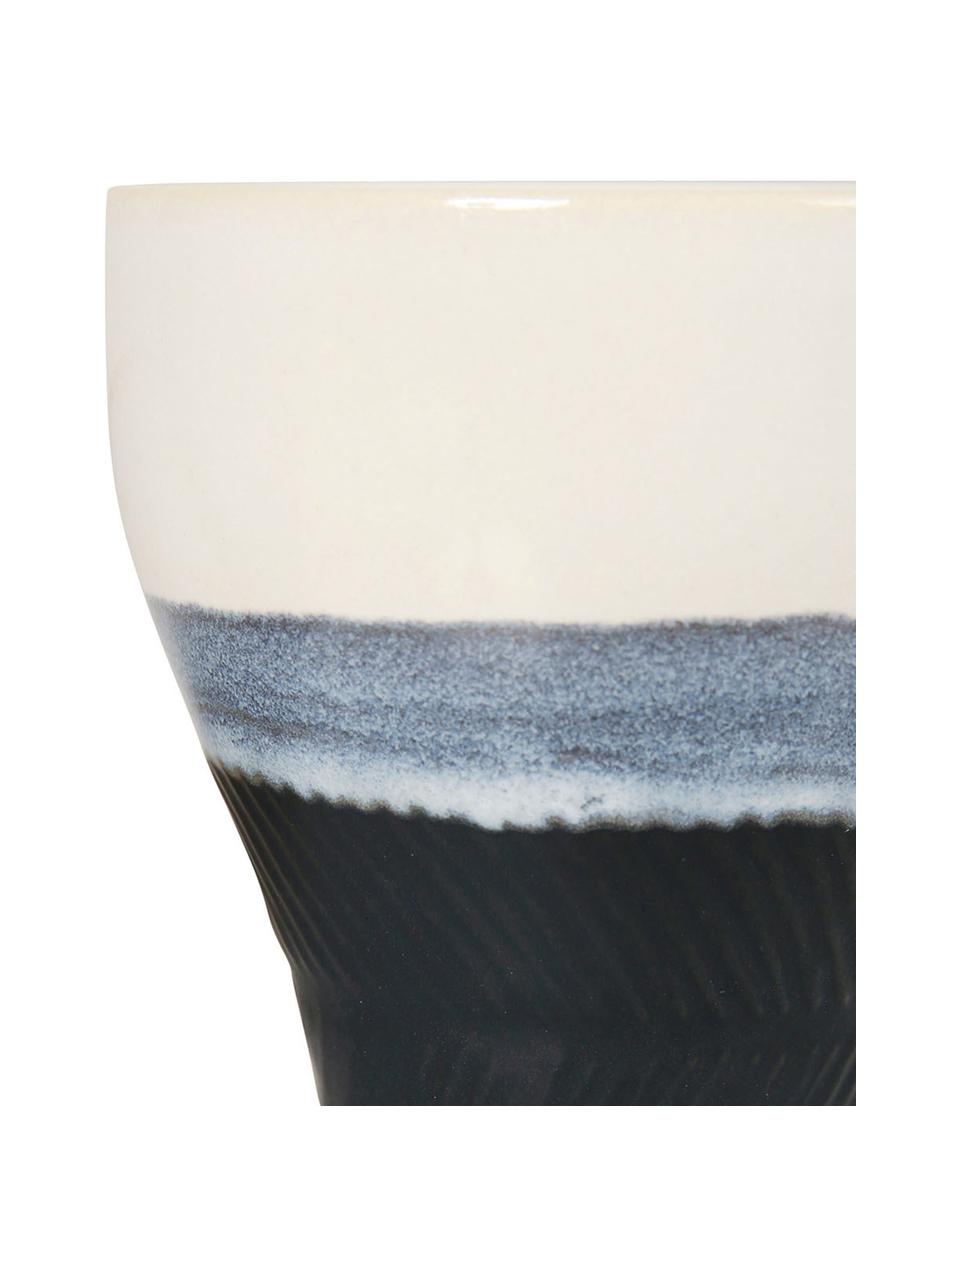 Sada velkých pohárků na espresso Ekume, 4 díly, Modrá, bílá, černá